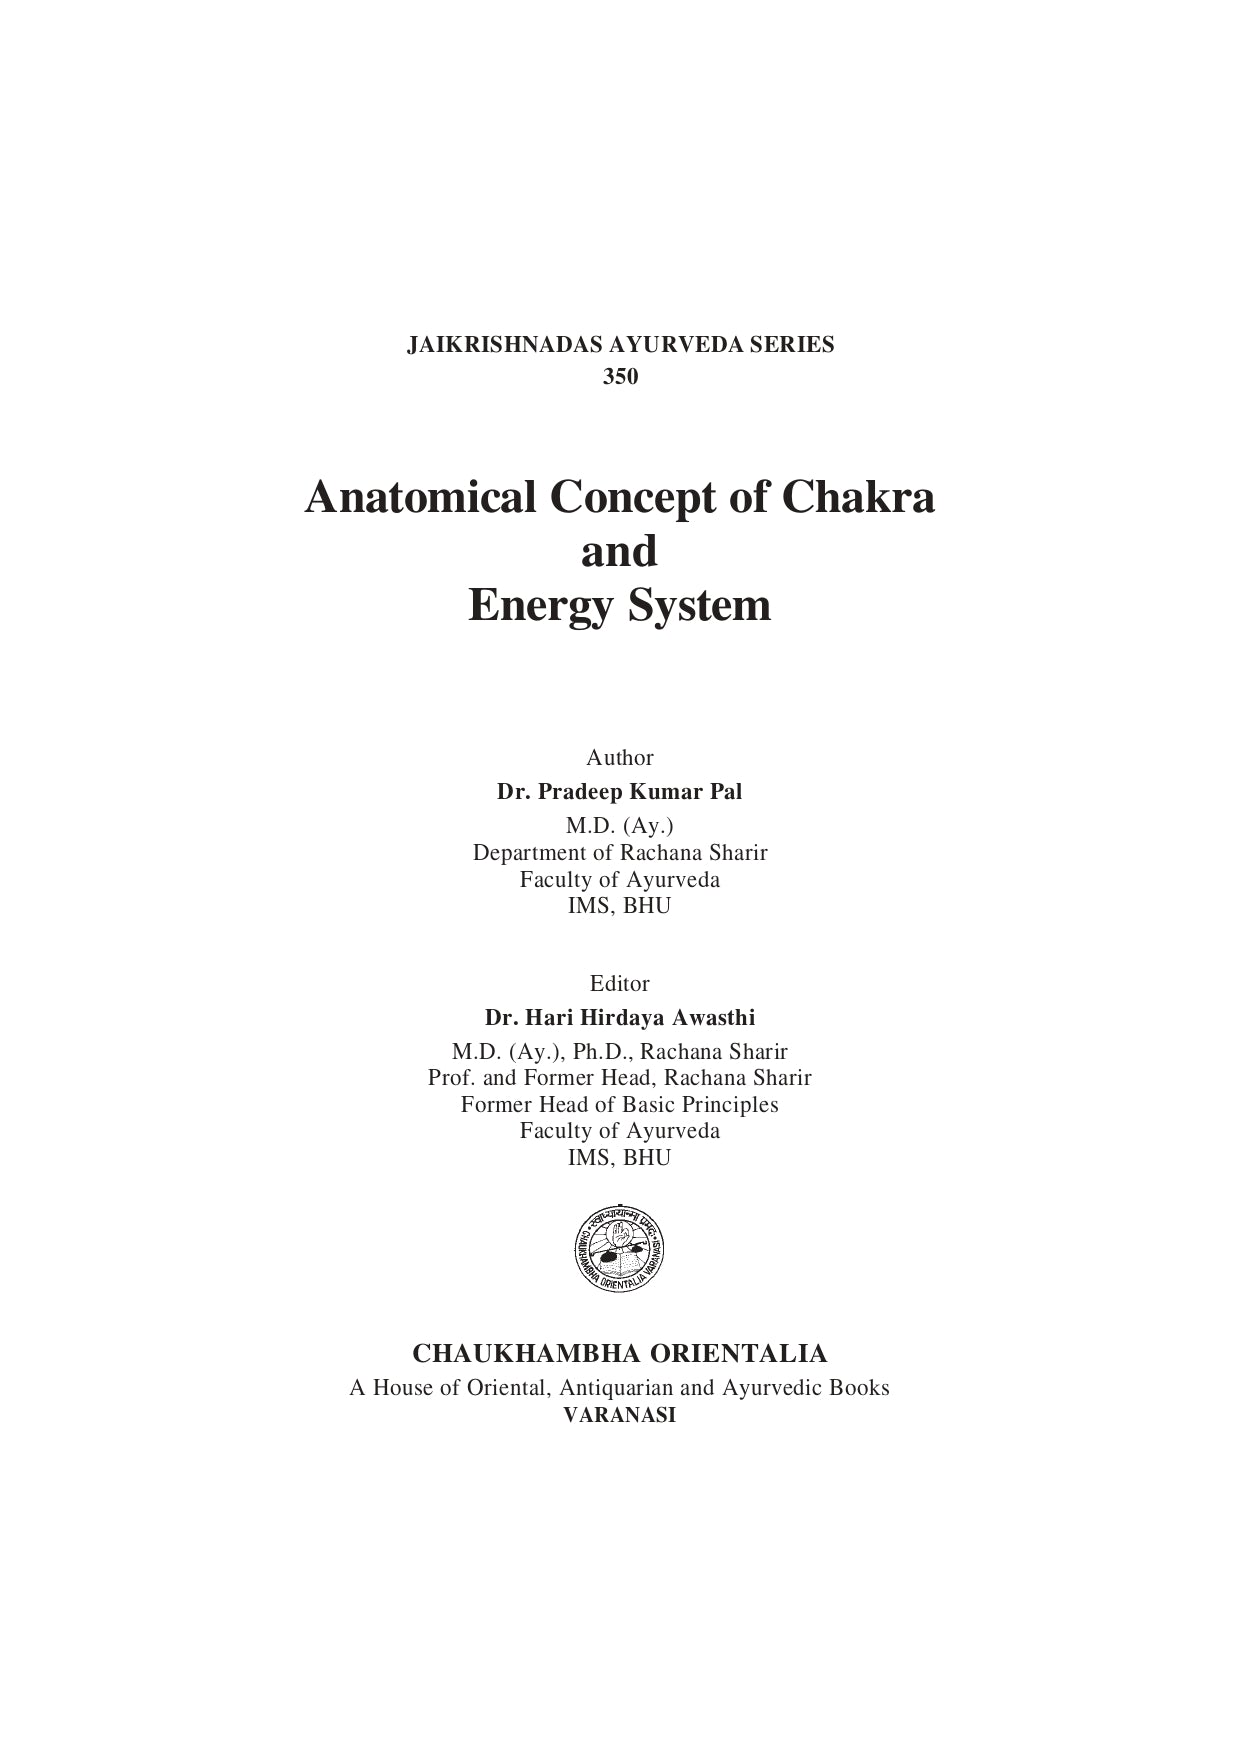 Chaukhambha Orientalia Anatomical Concept of Chakra and Energy System